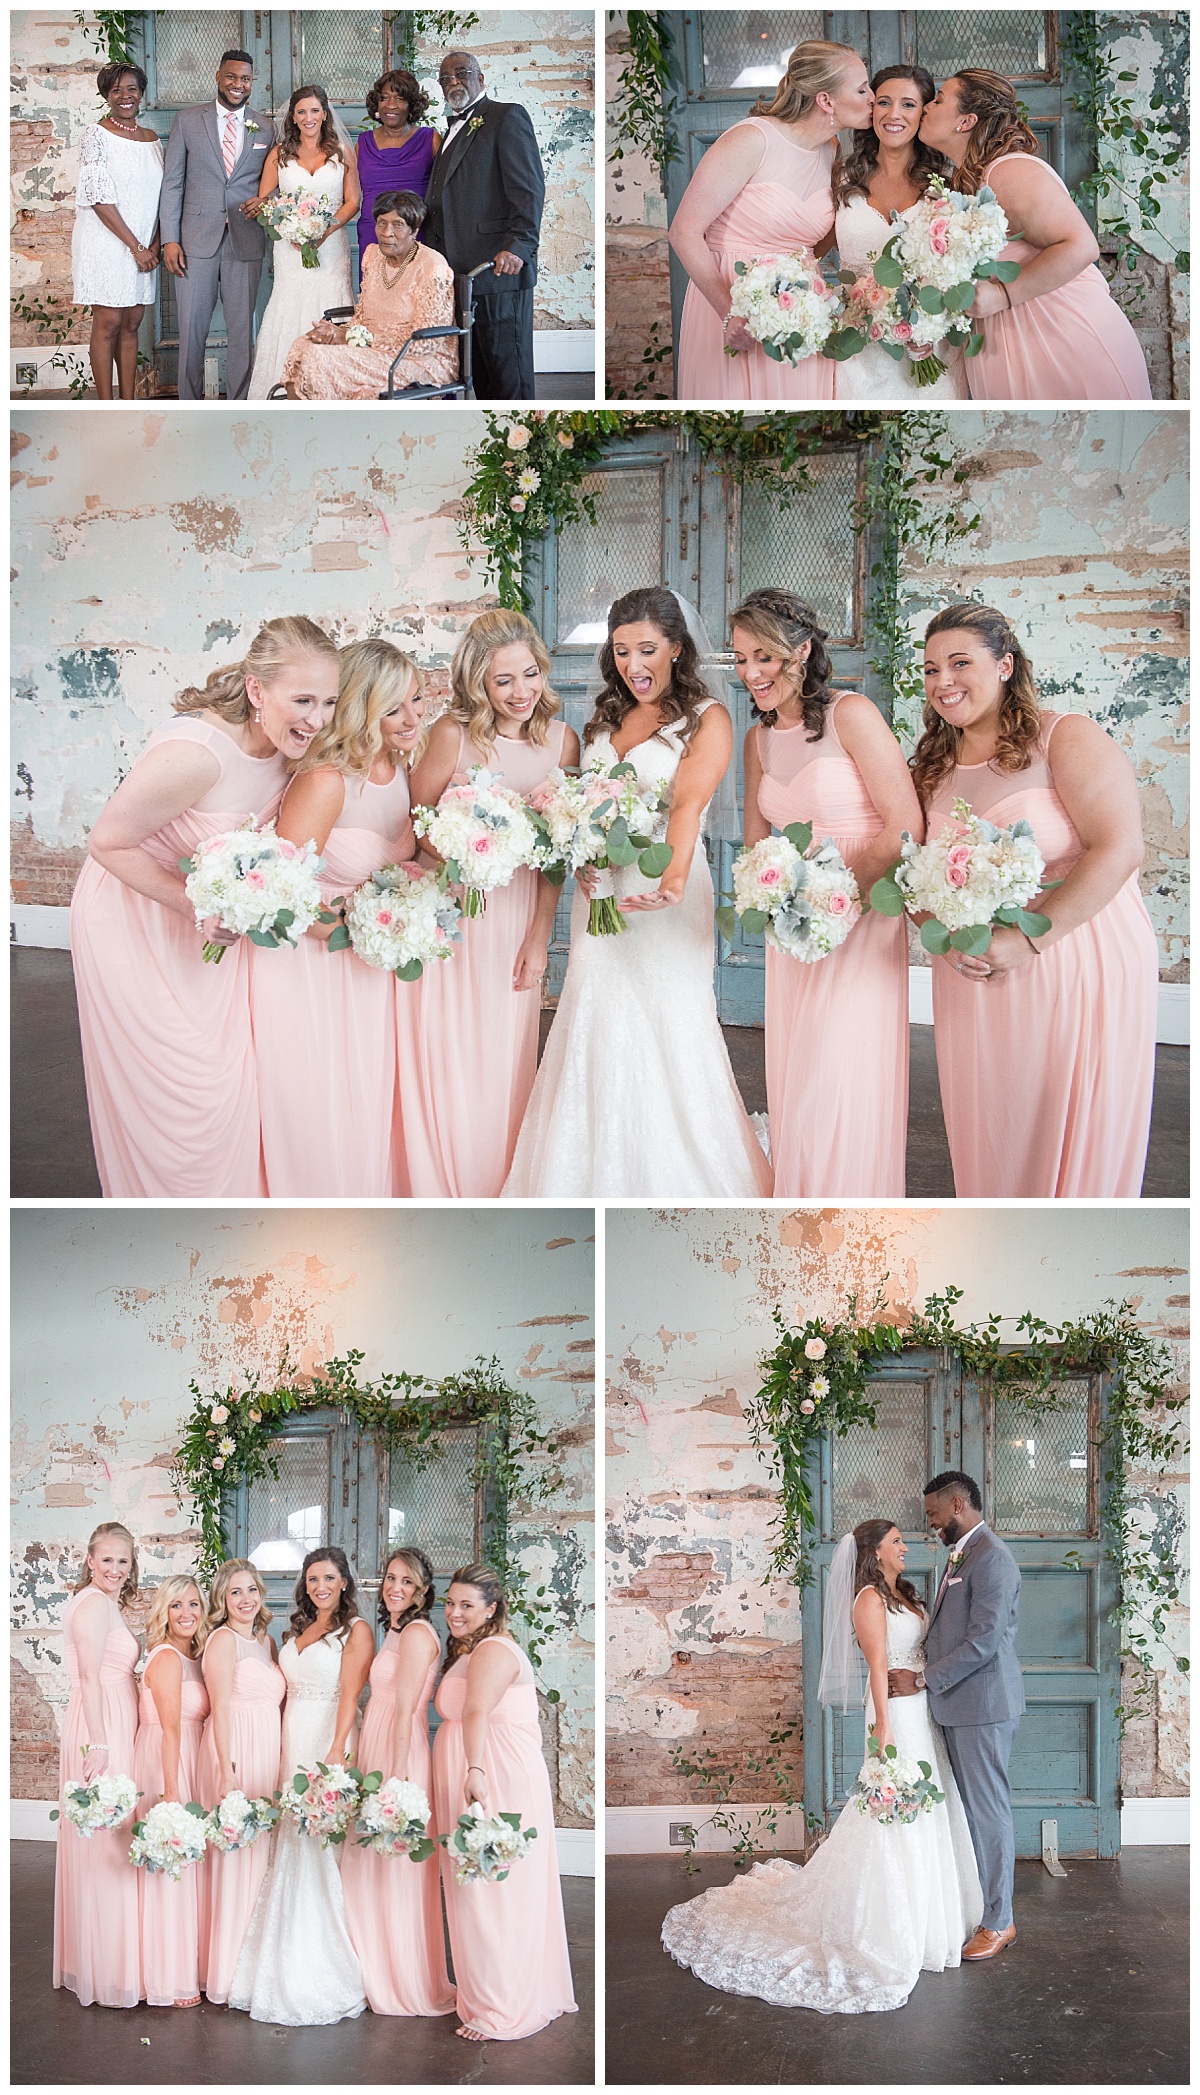 Photos of bridal party by door at 701